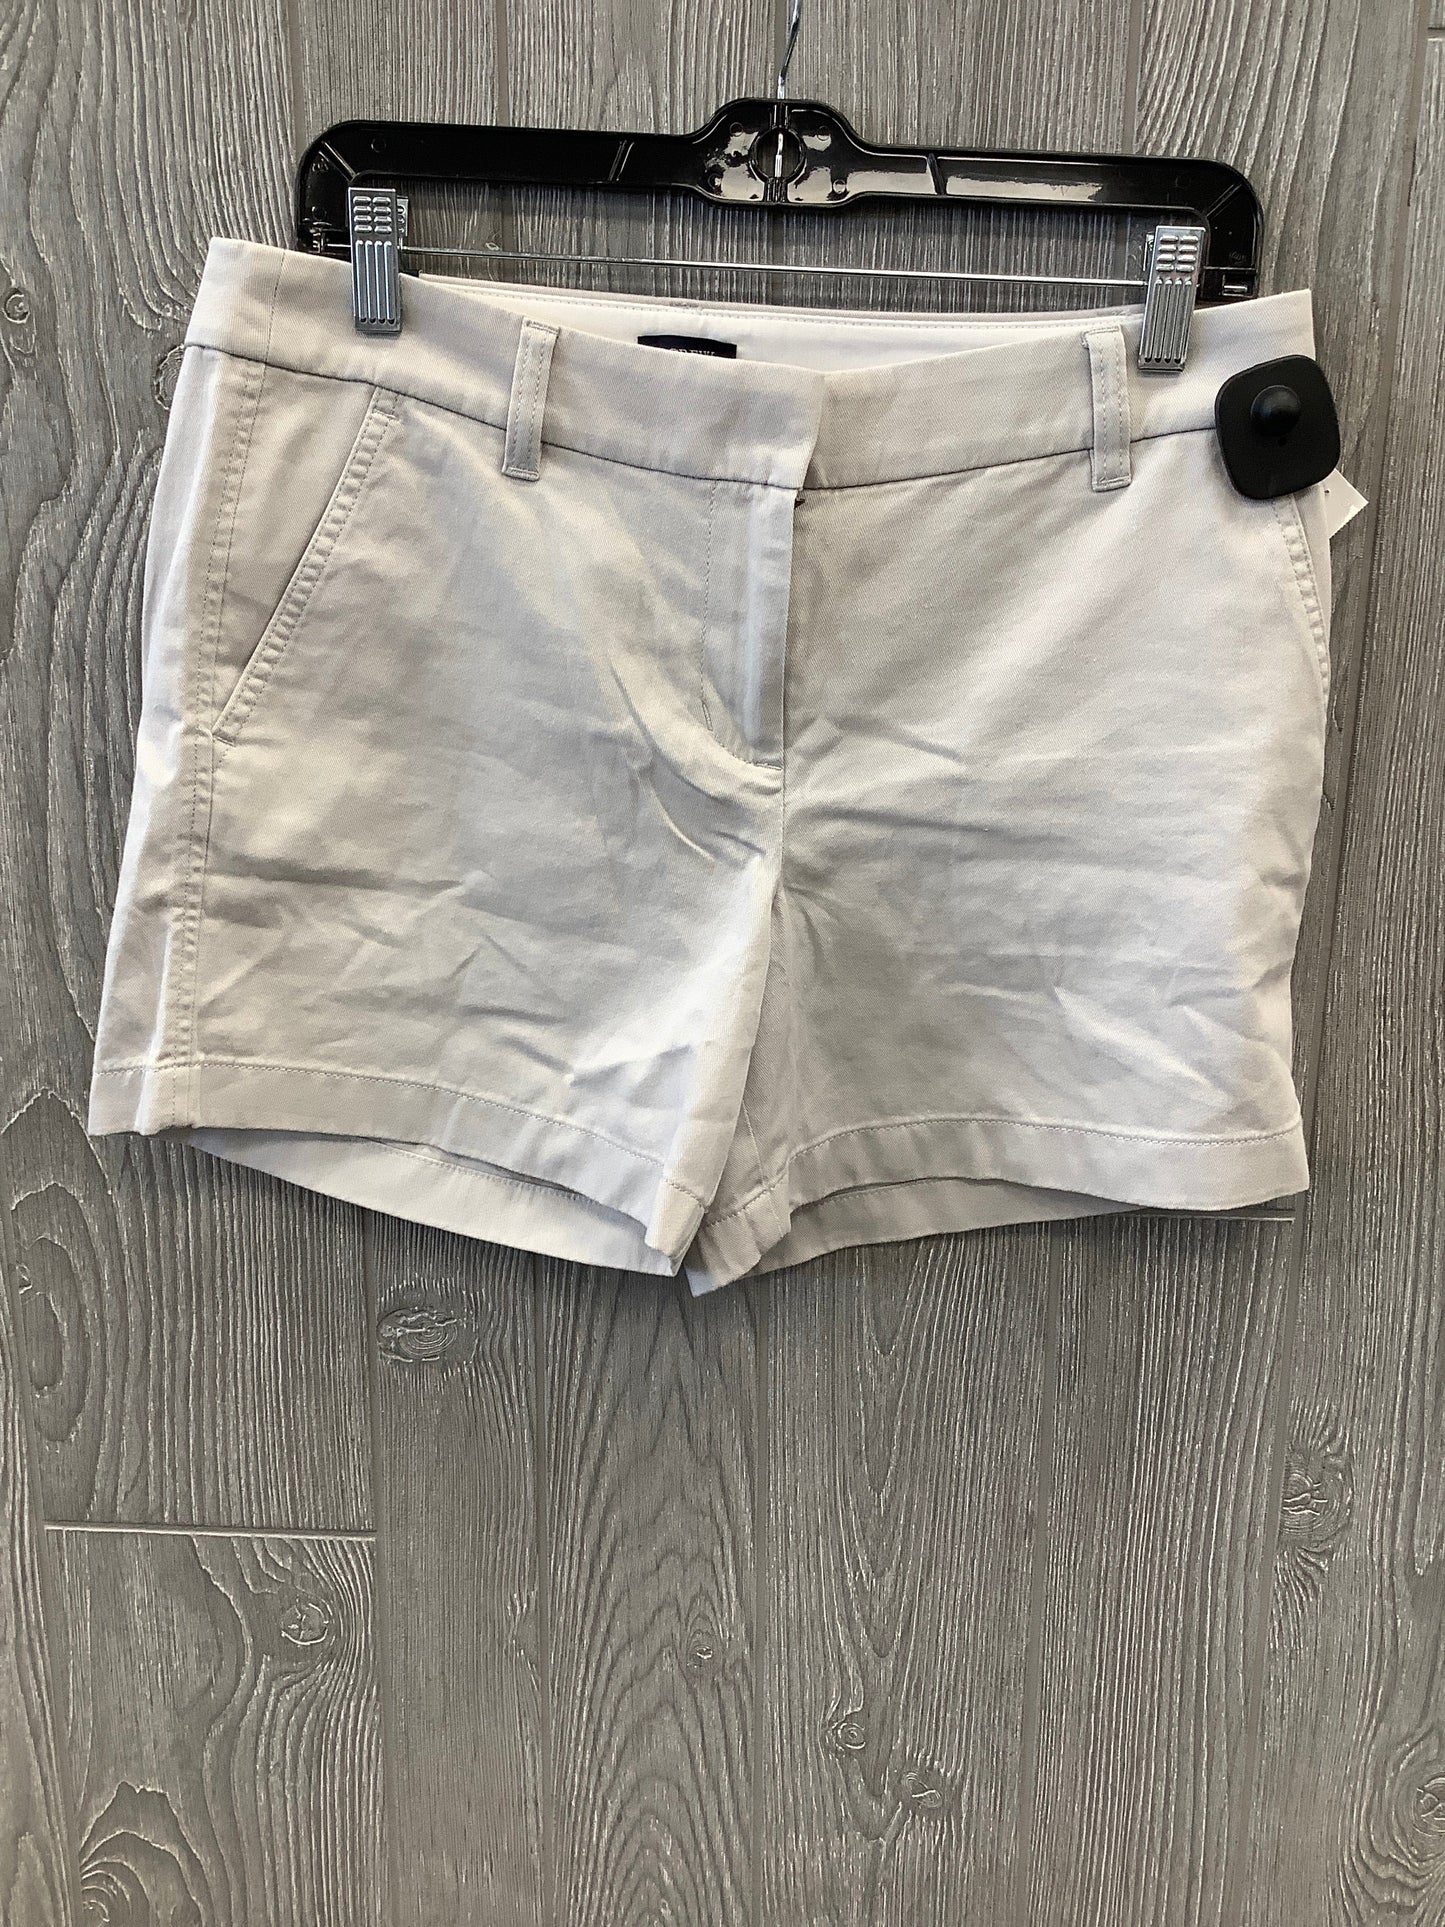 Grey Shorts J. Crew, Size 6